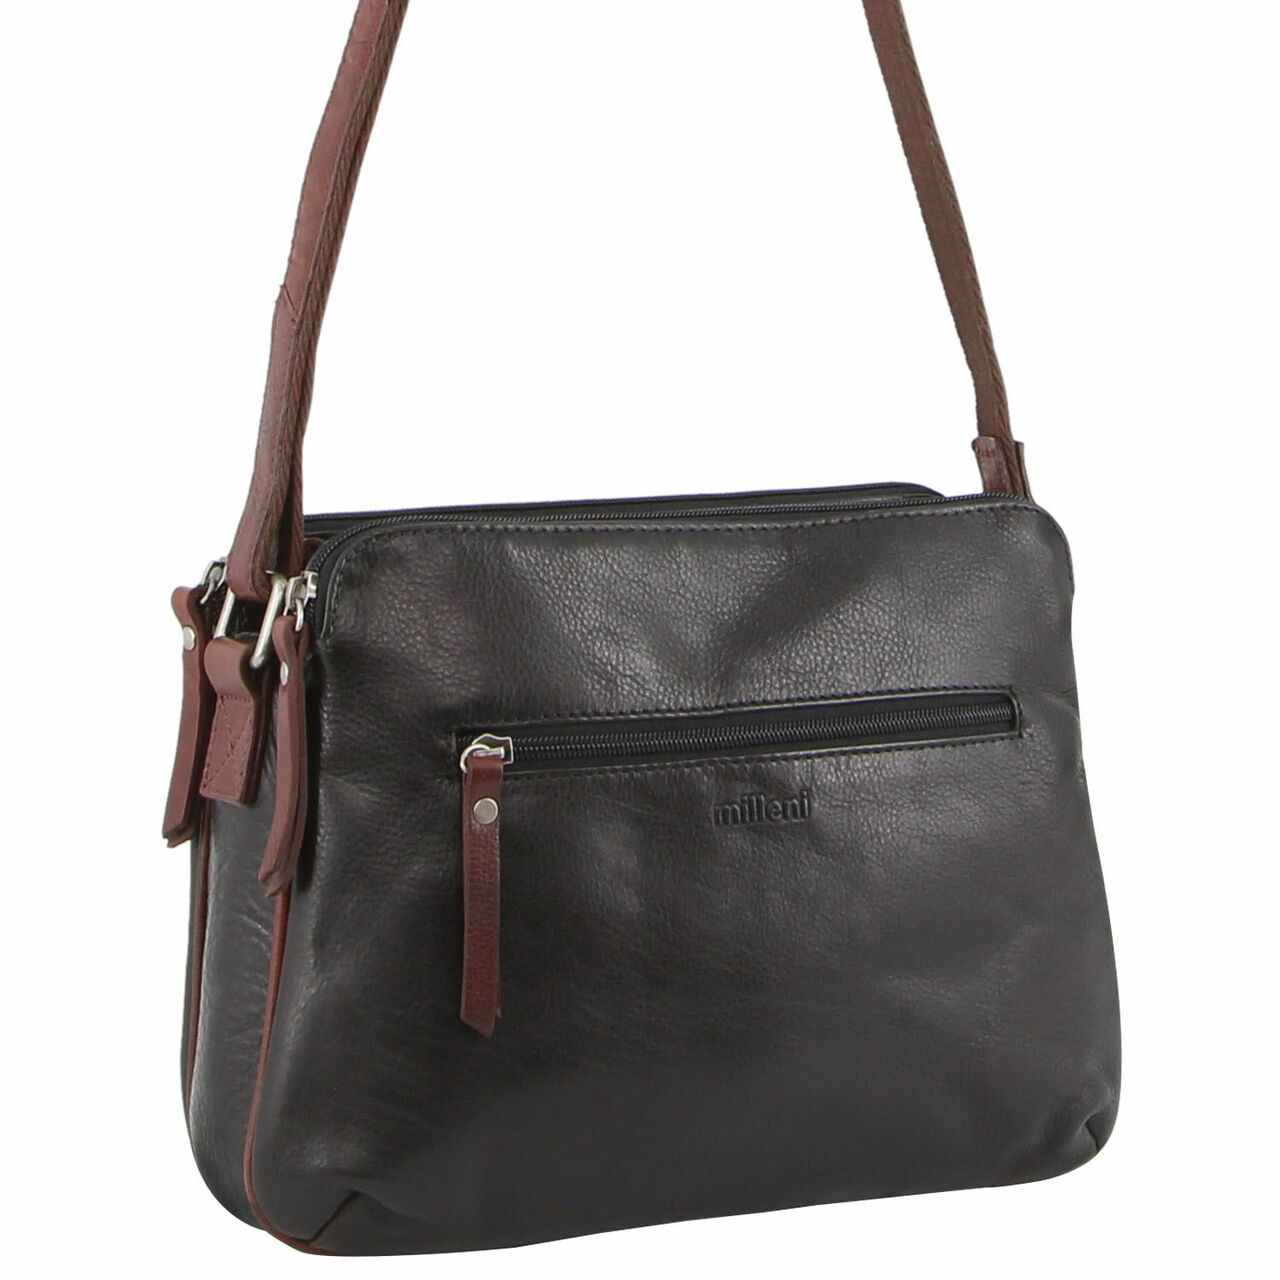 Milleni Ladies Nappa Leather Cross-Body Bag